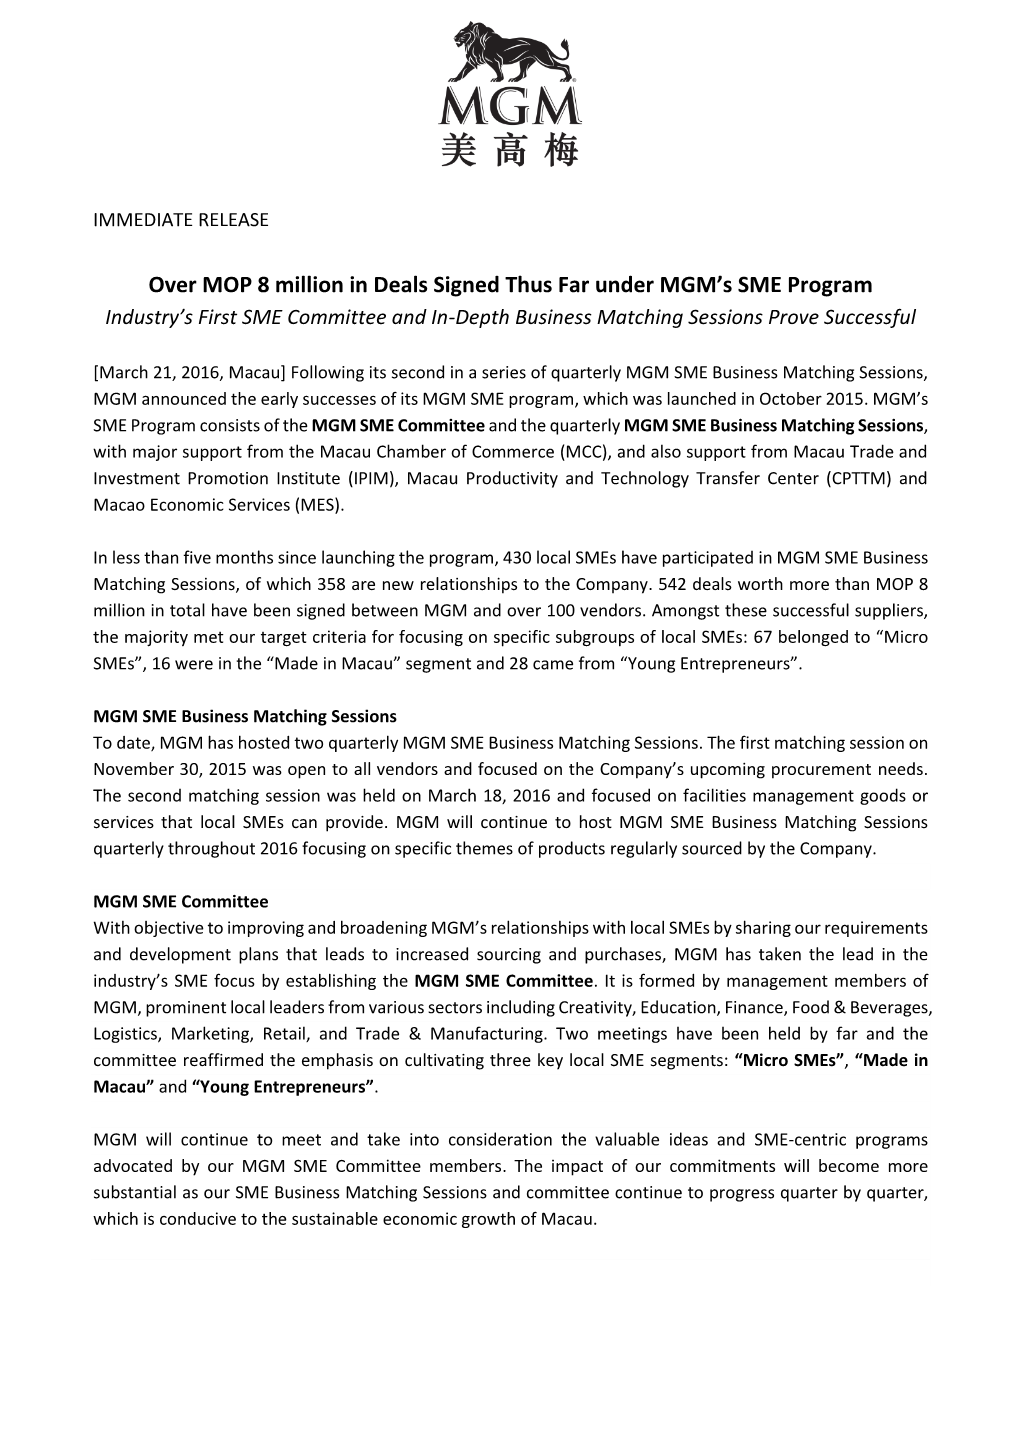 Over MOP 8 Million in Deals Signed Thus Far Under MGM's SME Program